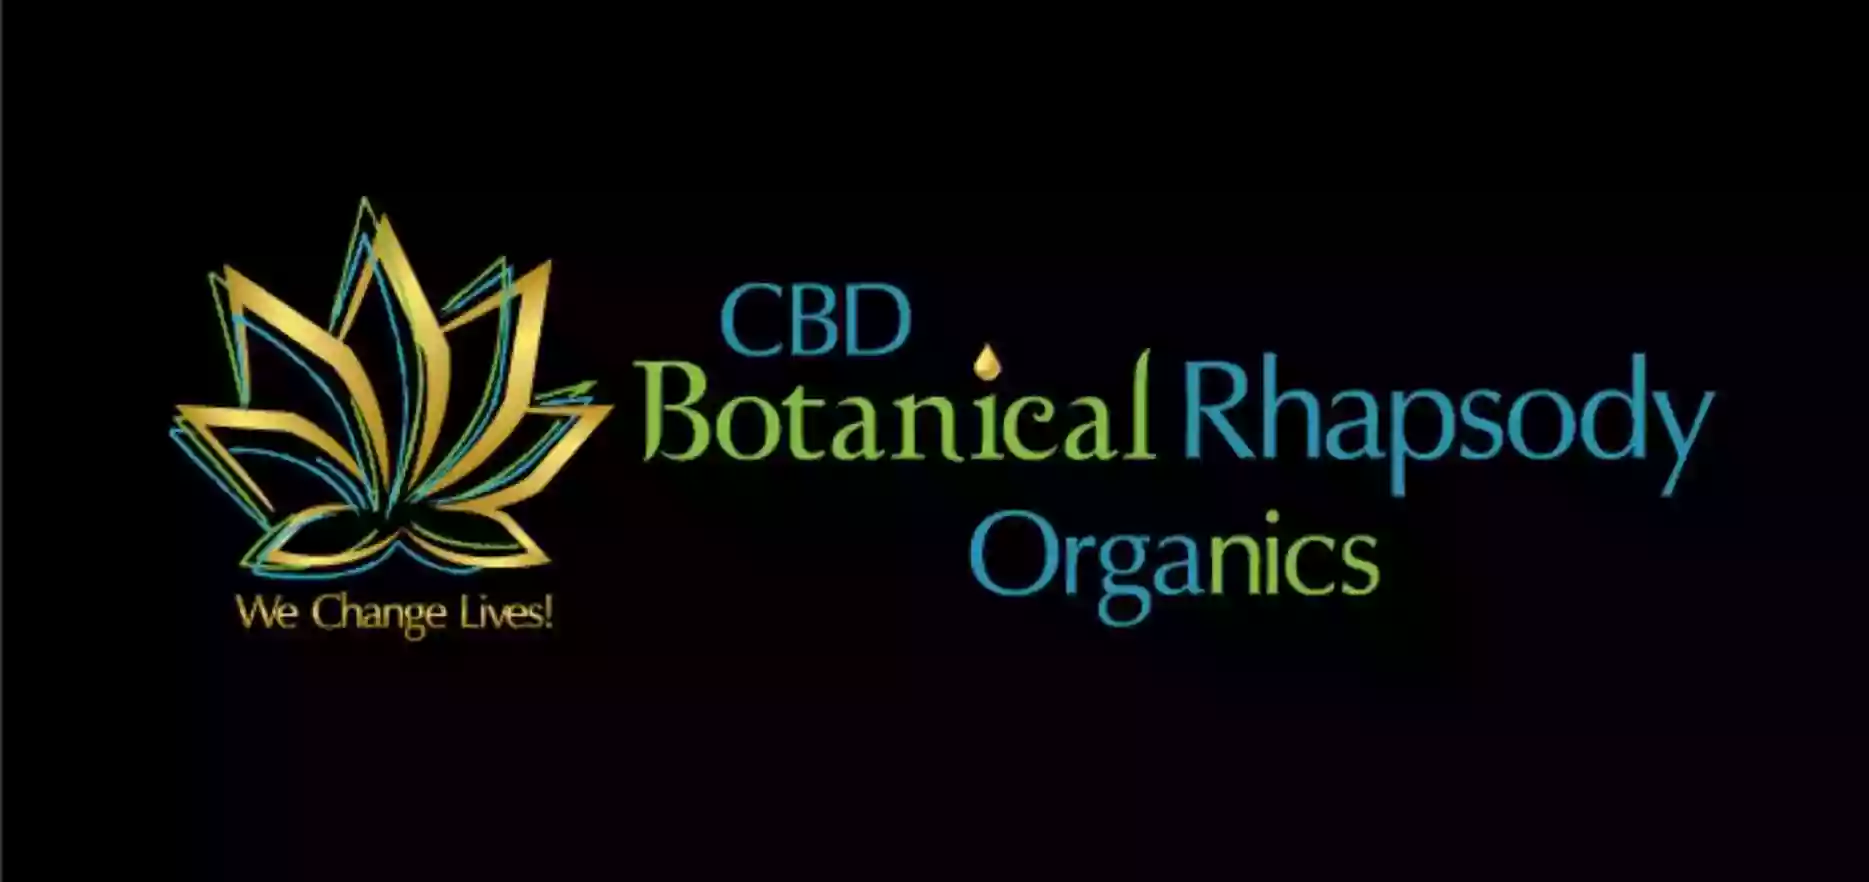 Botanical Rhapsody Organics of Sioux Falls (CBD Store)